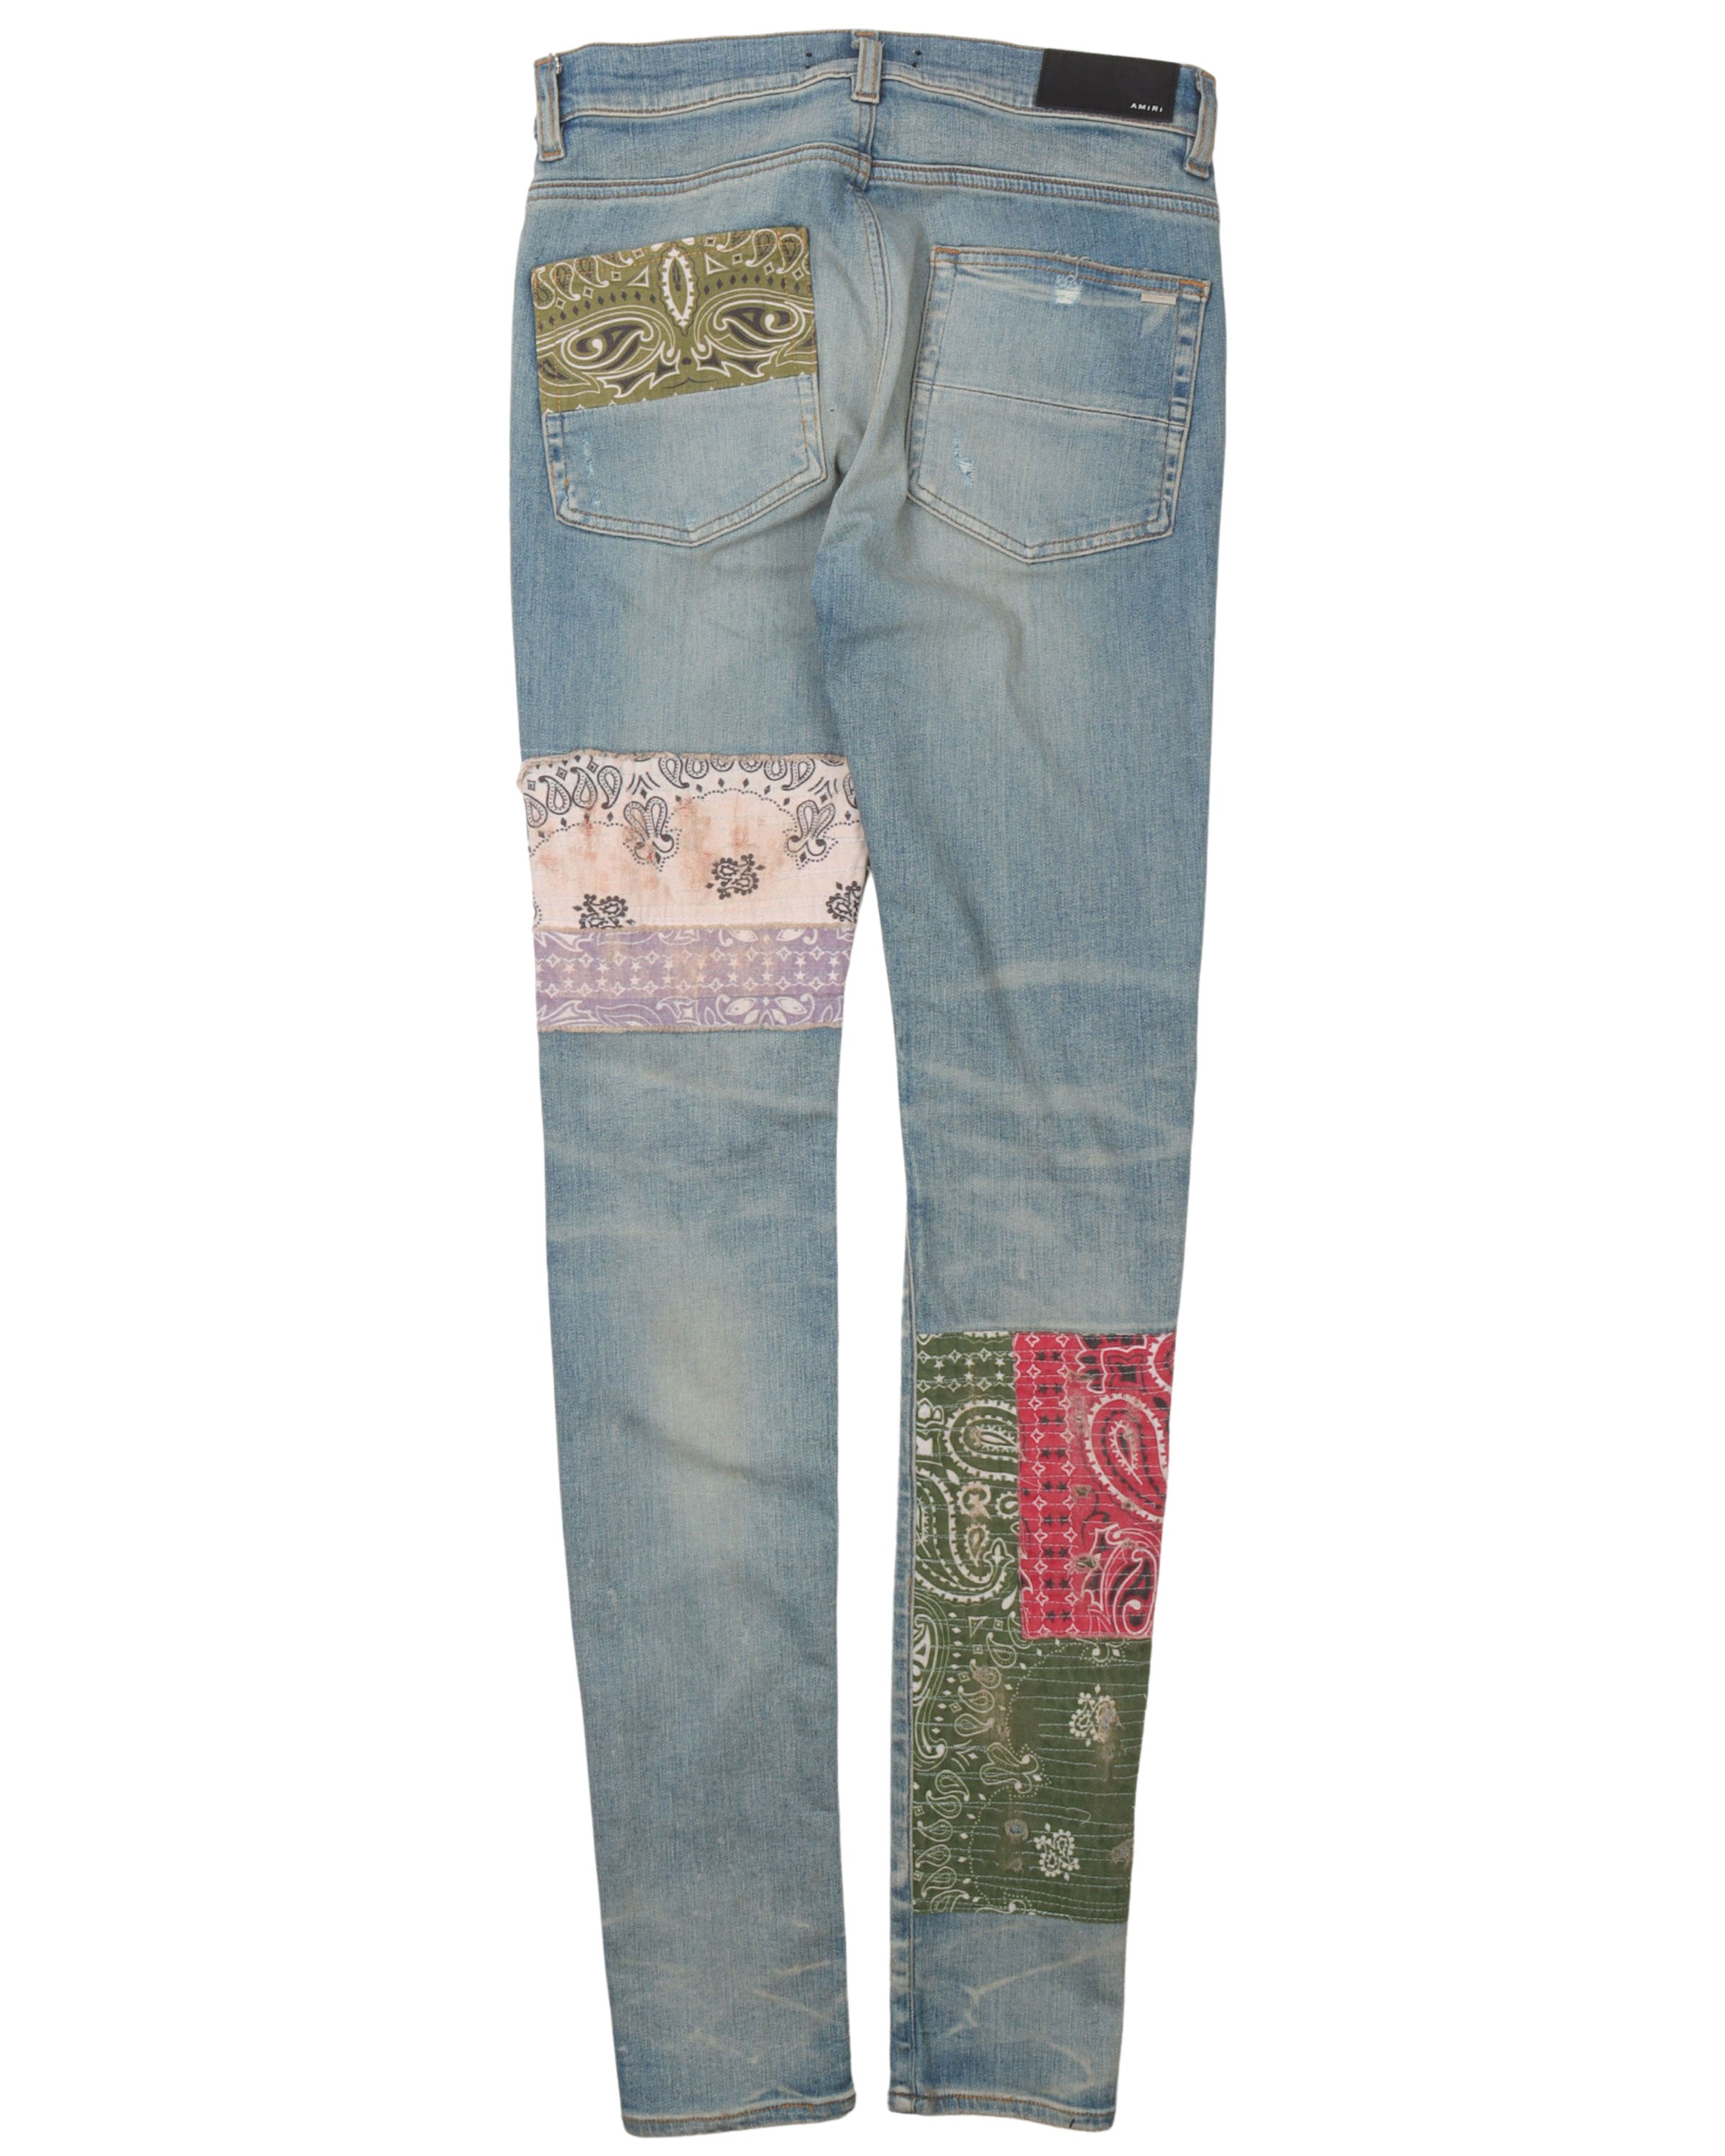 Bandana Patched Jeans